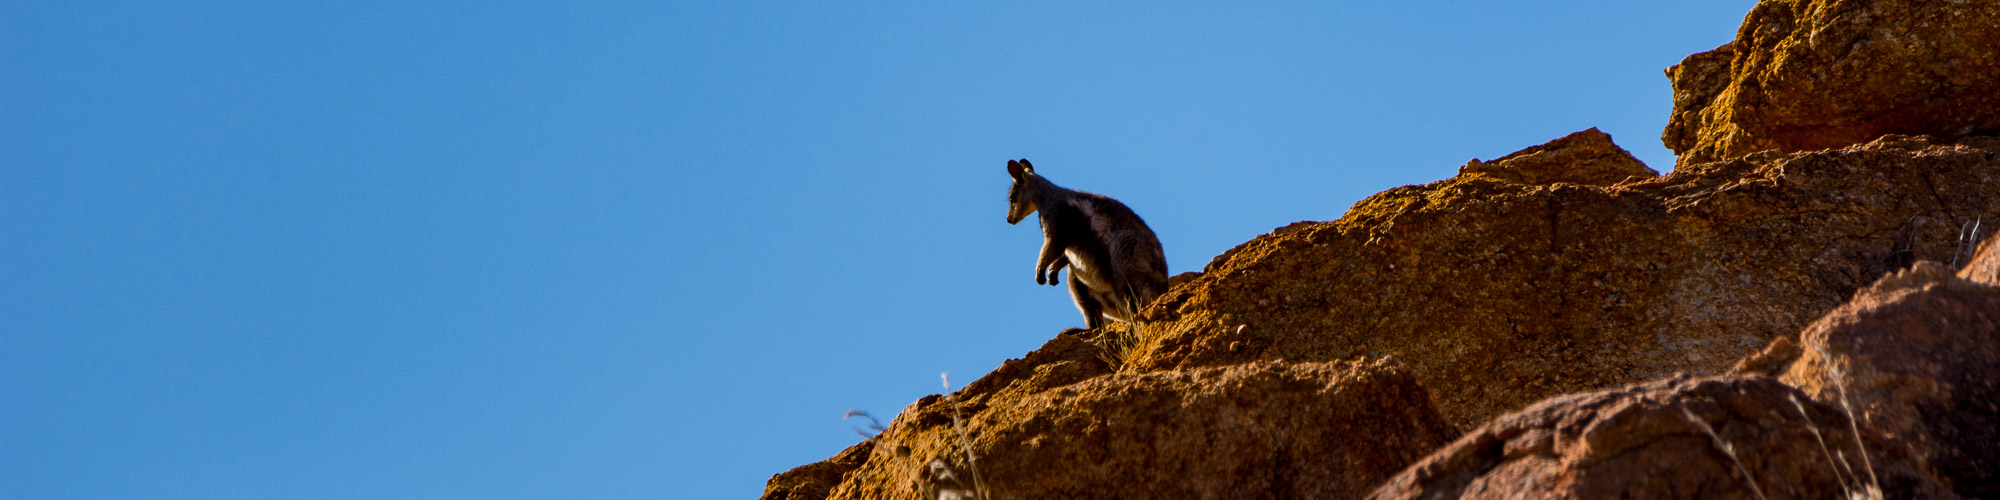 Kangaroos and Wallabies I: Preparing the Data